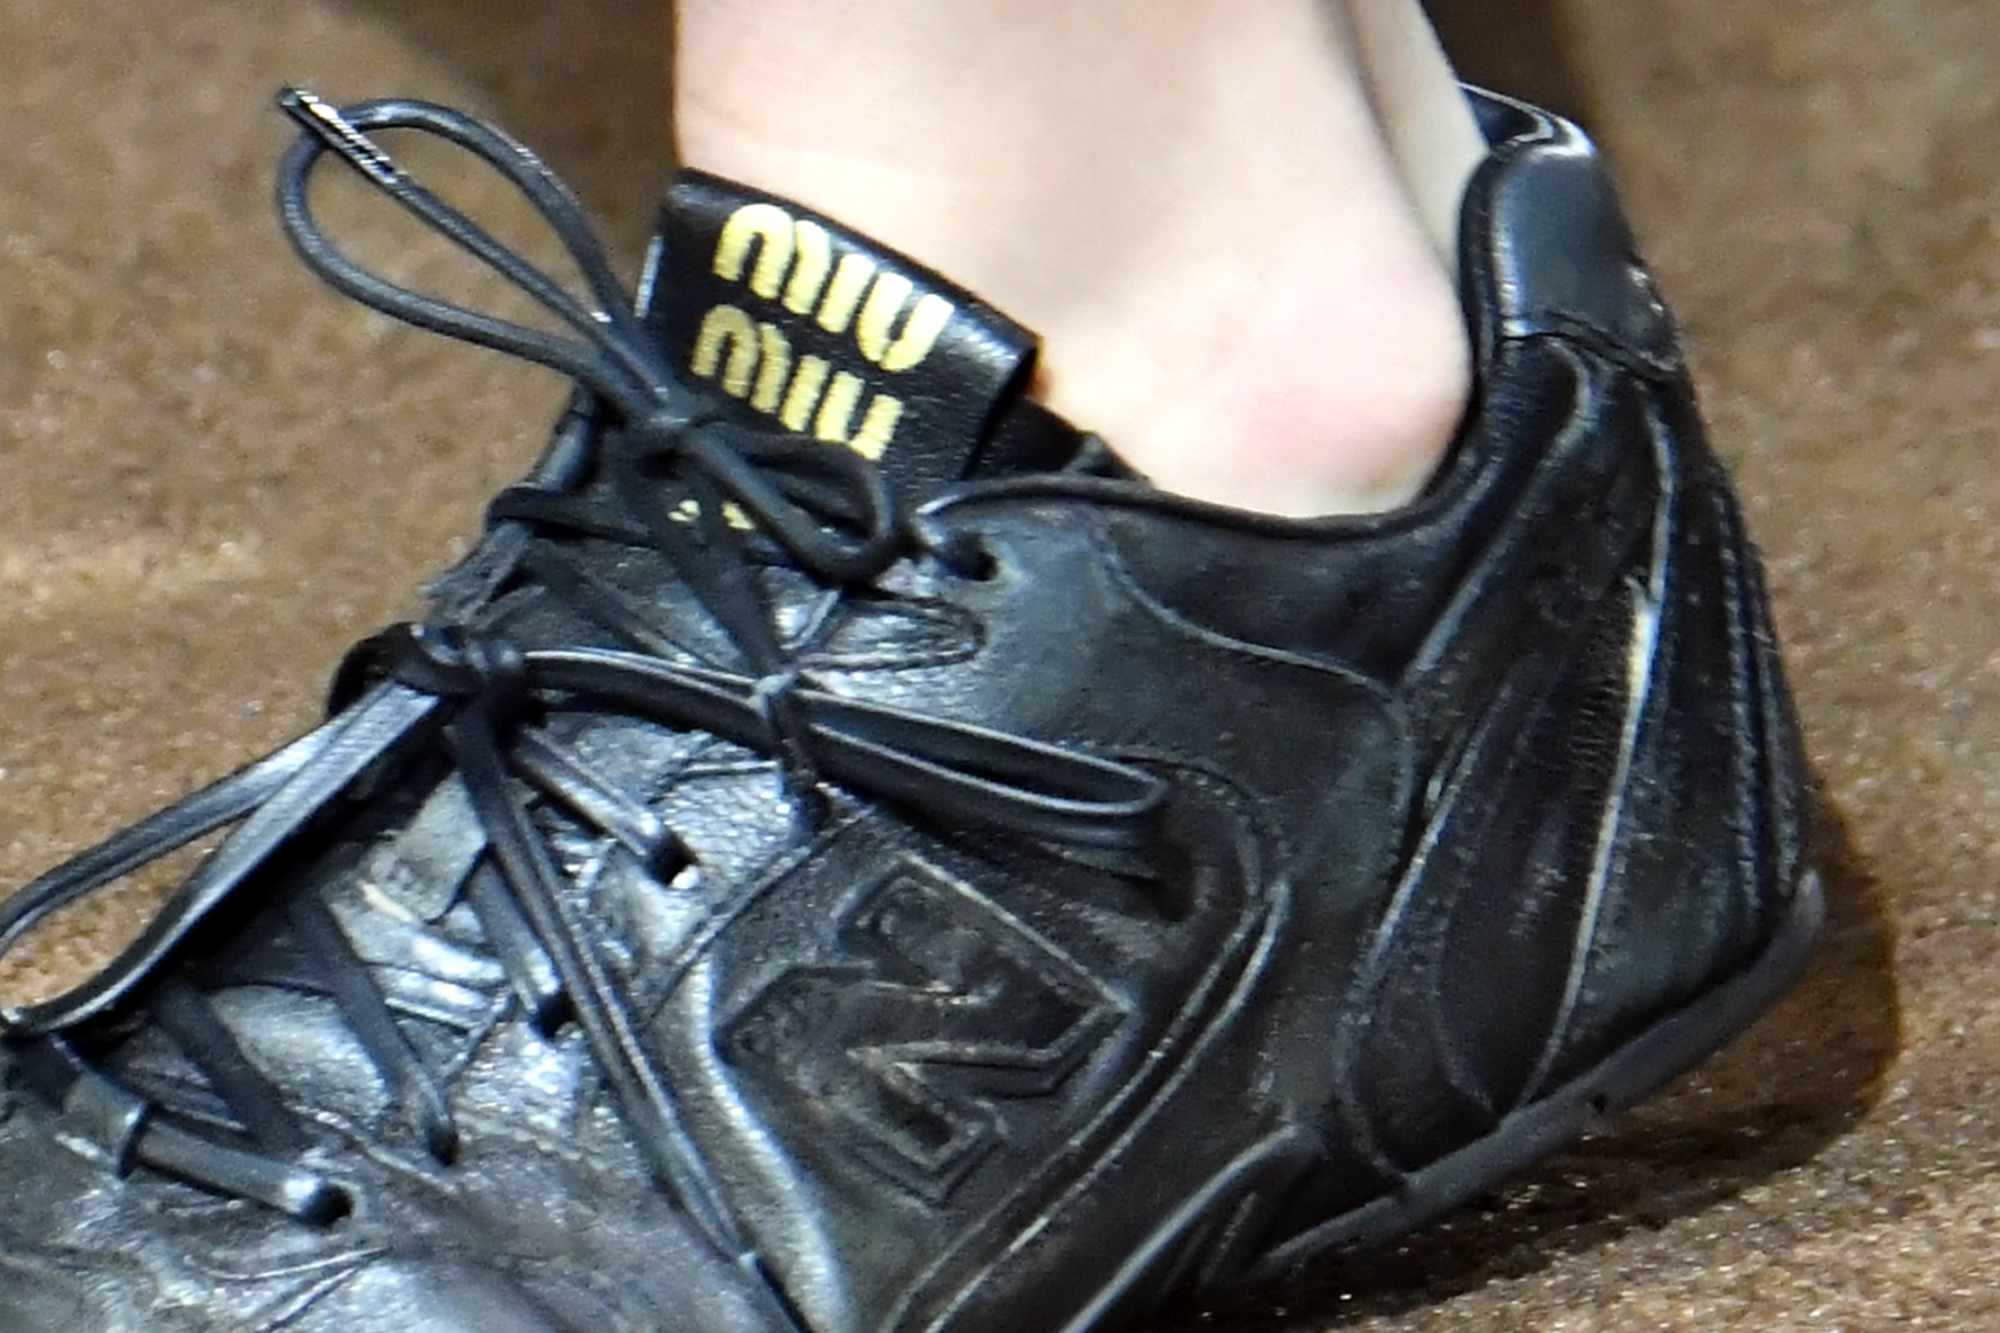 Miu Miu's black New Balance 530 sneaker with a flat sole